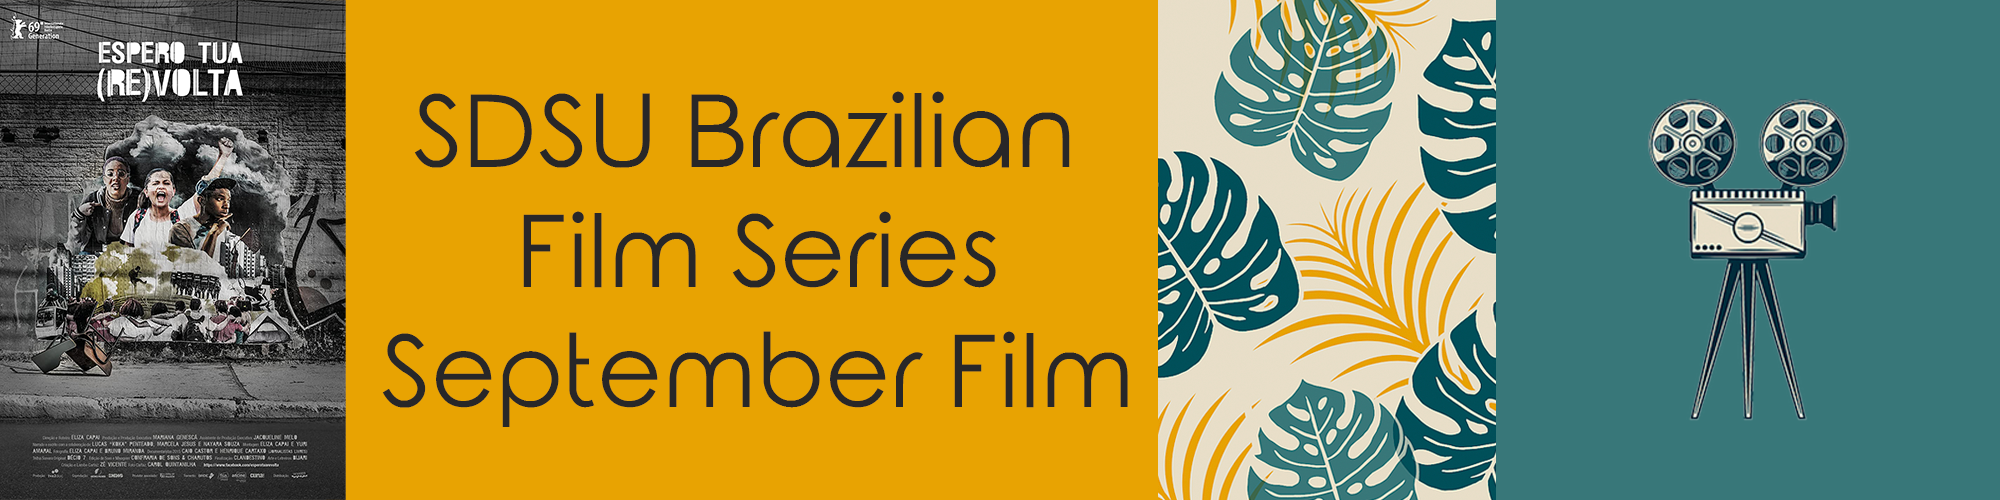 SDSU Brazilian Film Series Septemember FIlm